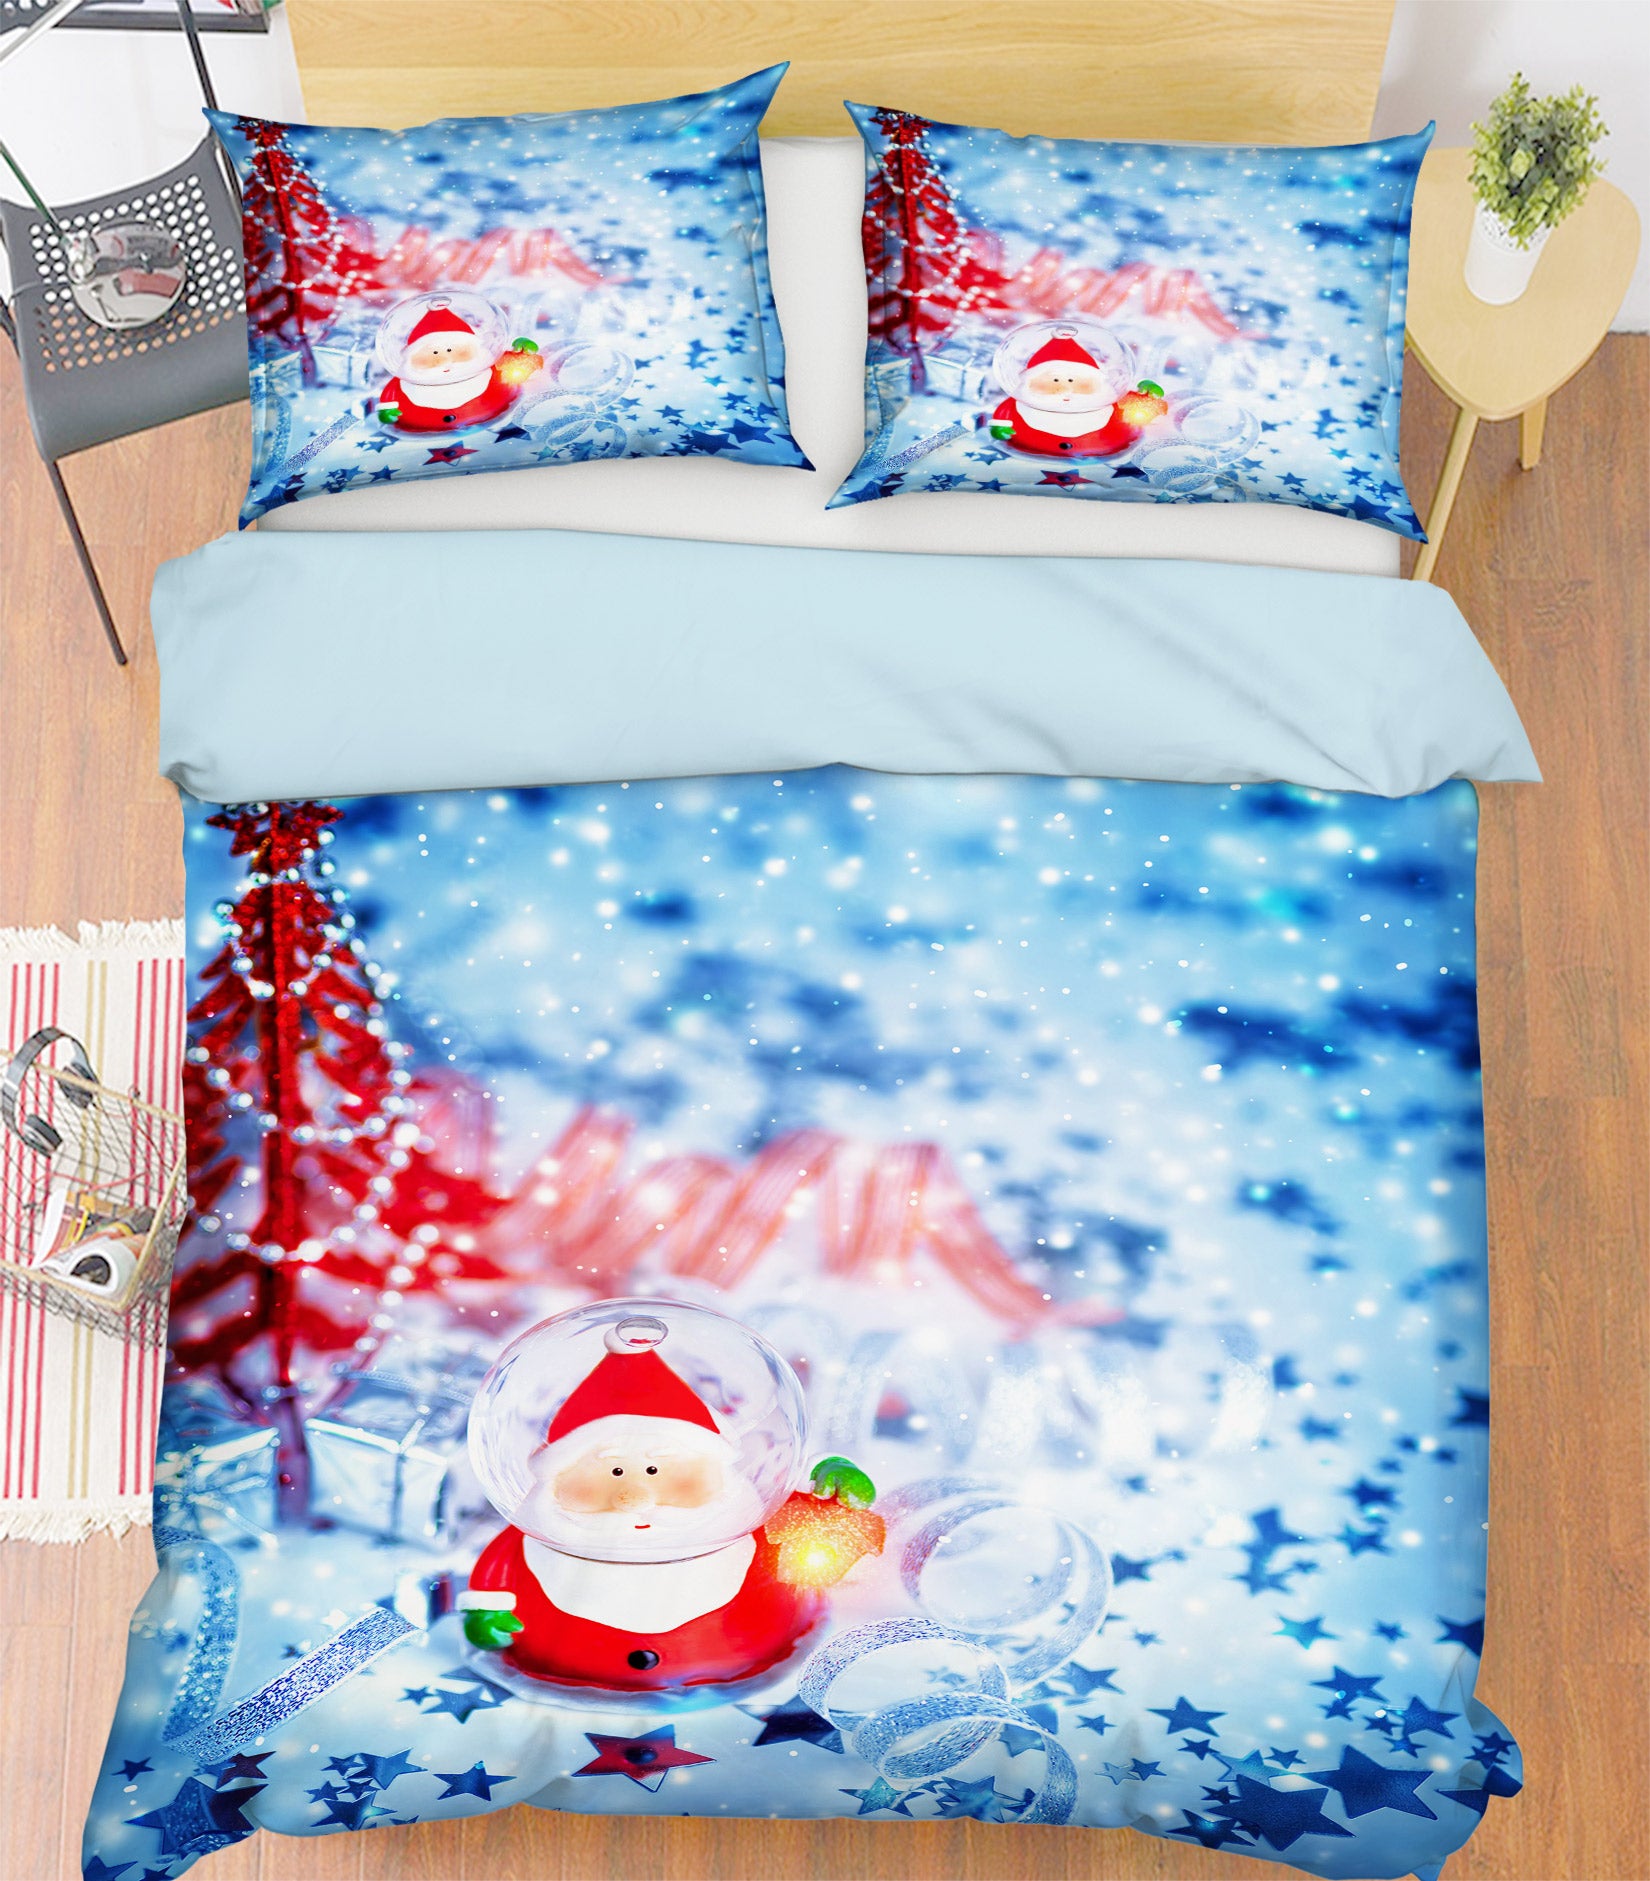 3D Santa Claus Ornaments 52120 Christmas Quilt Duvet Cover Xmas Bed Pillowcases